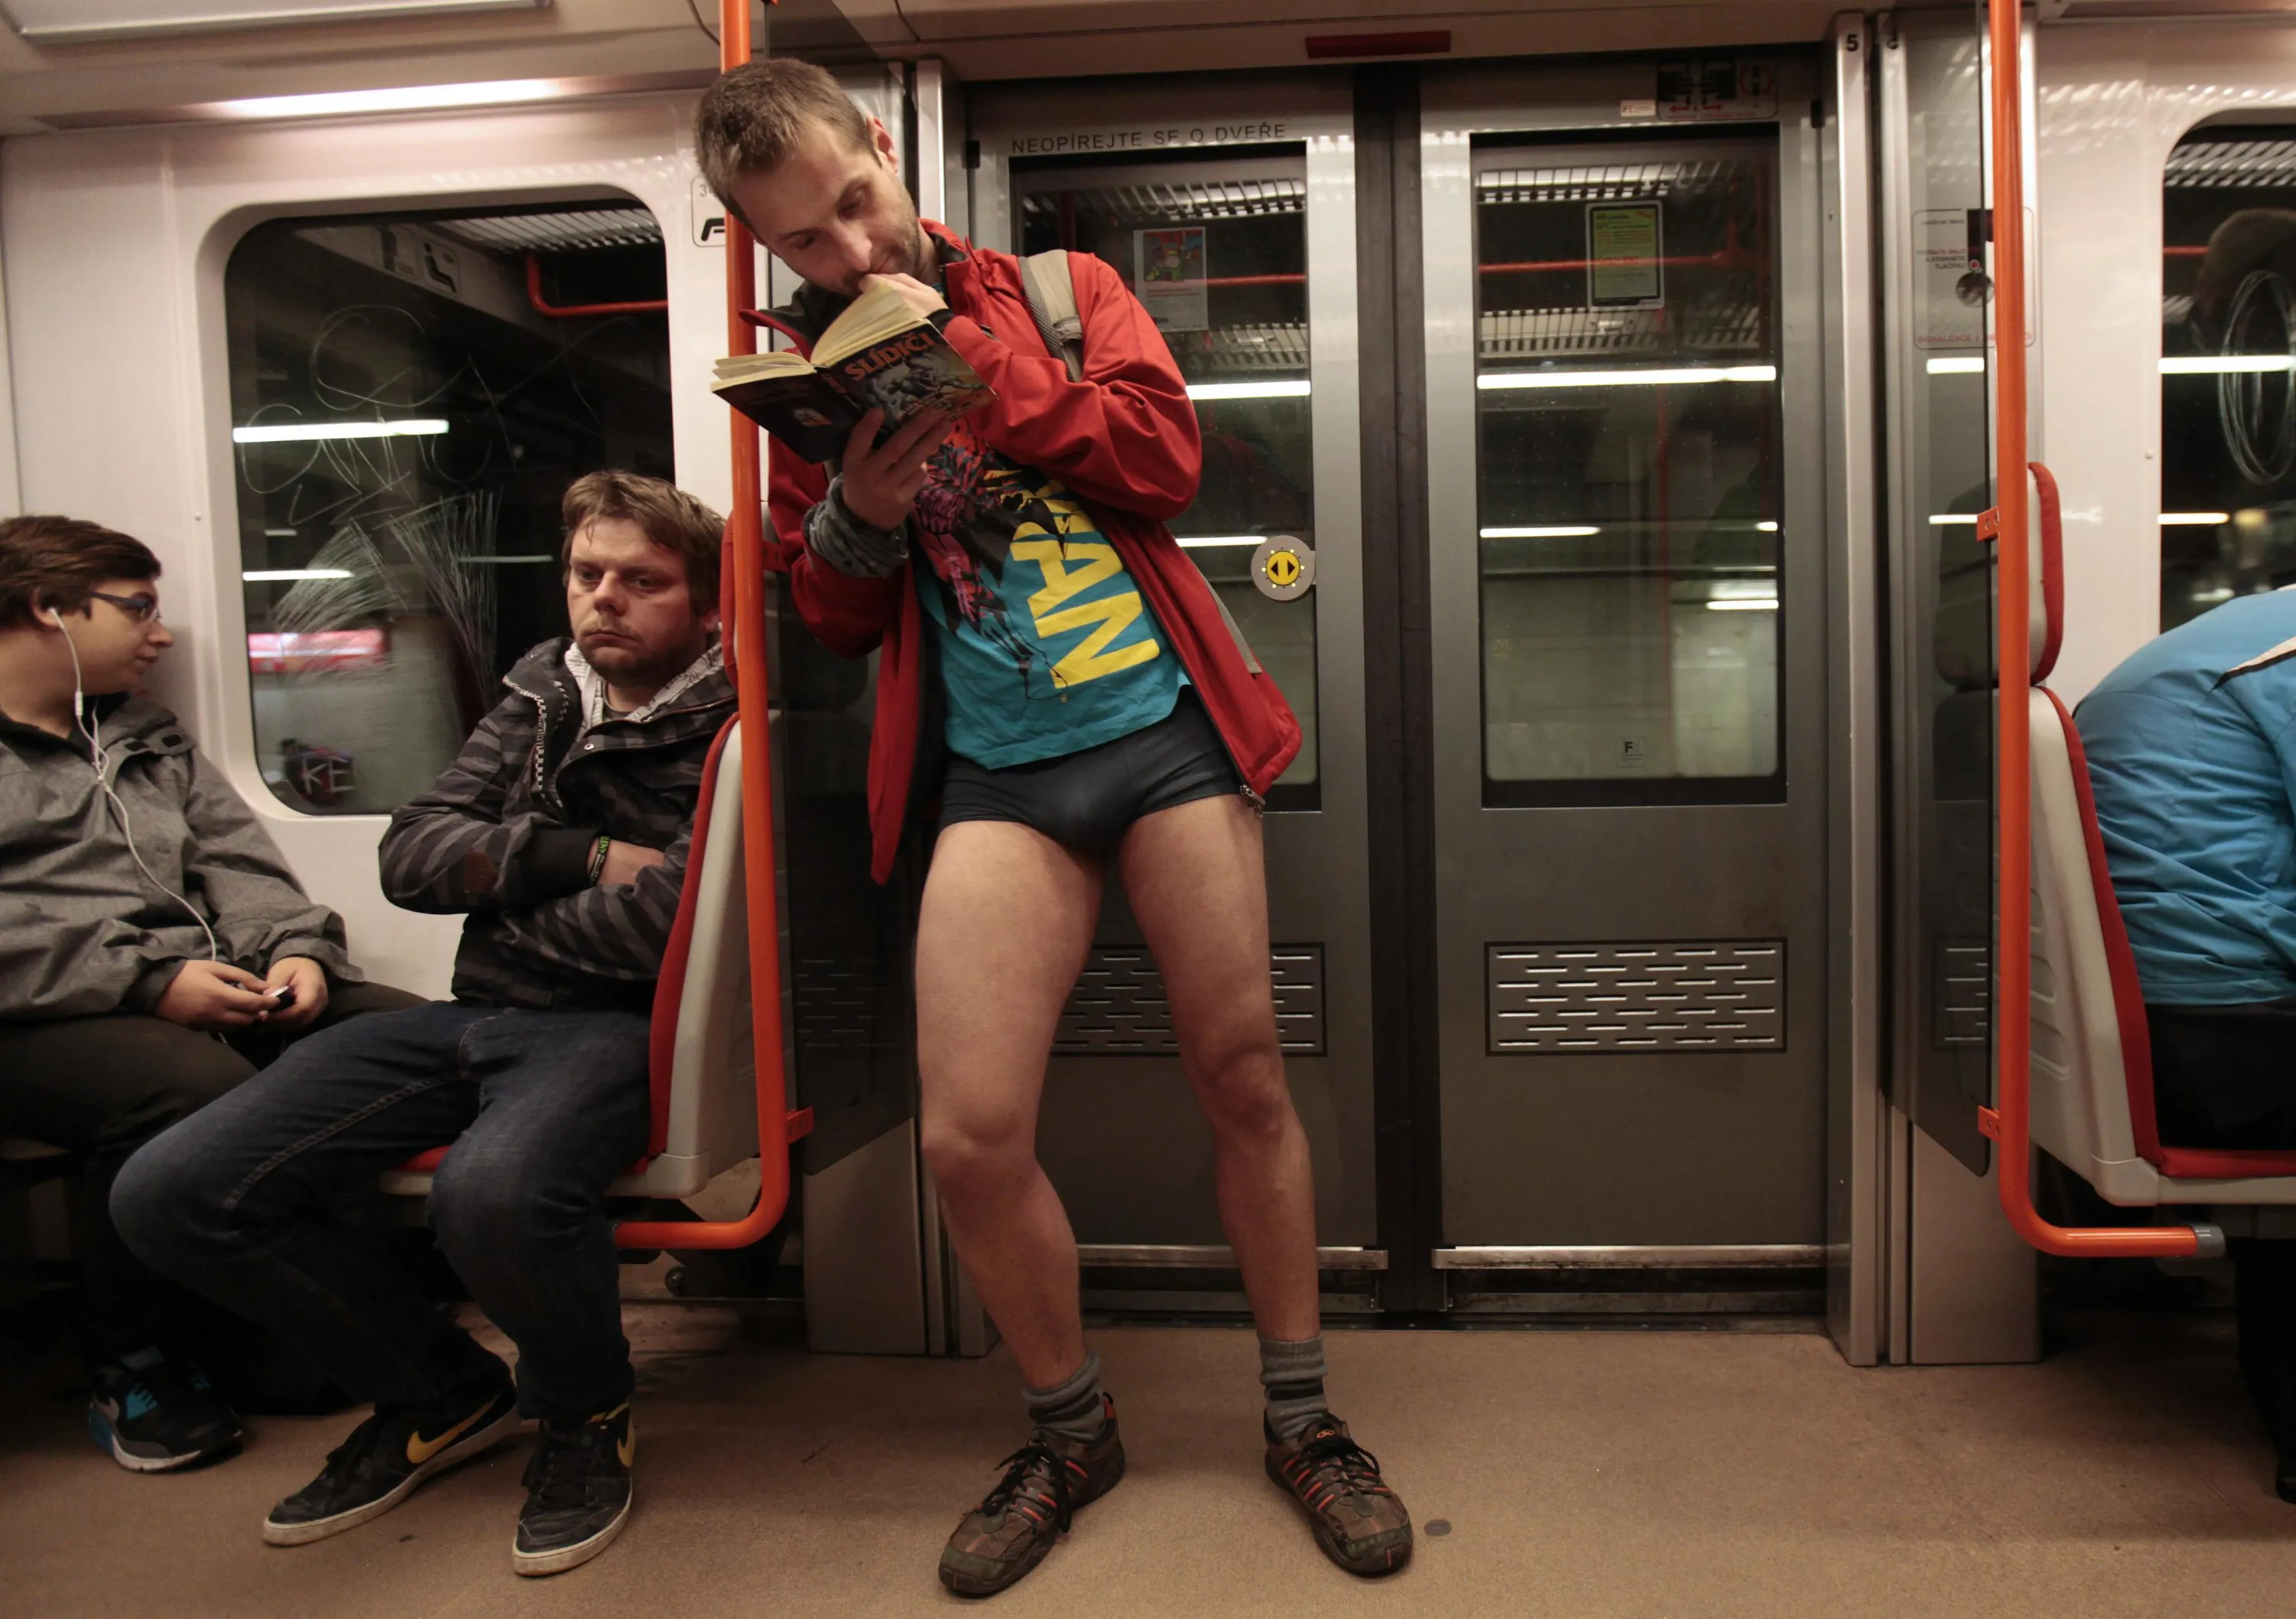 Мужчина без штанов. В метро без штанов. Мужчины в метро без штанов. Пацаны без штанов. Парень в метро.